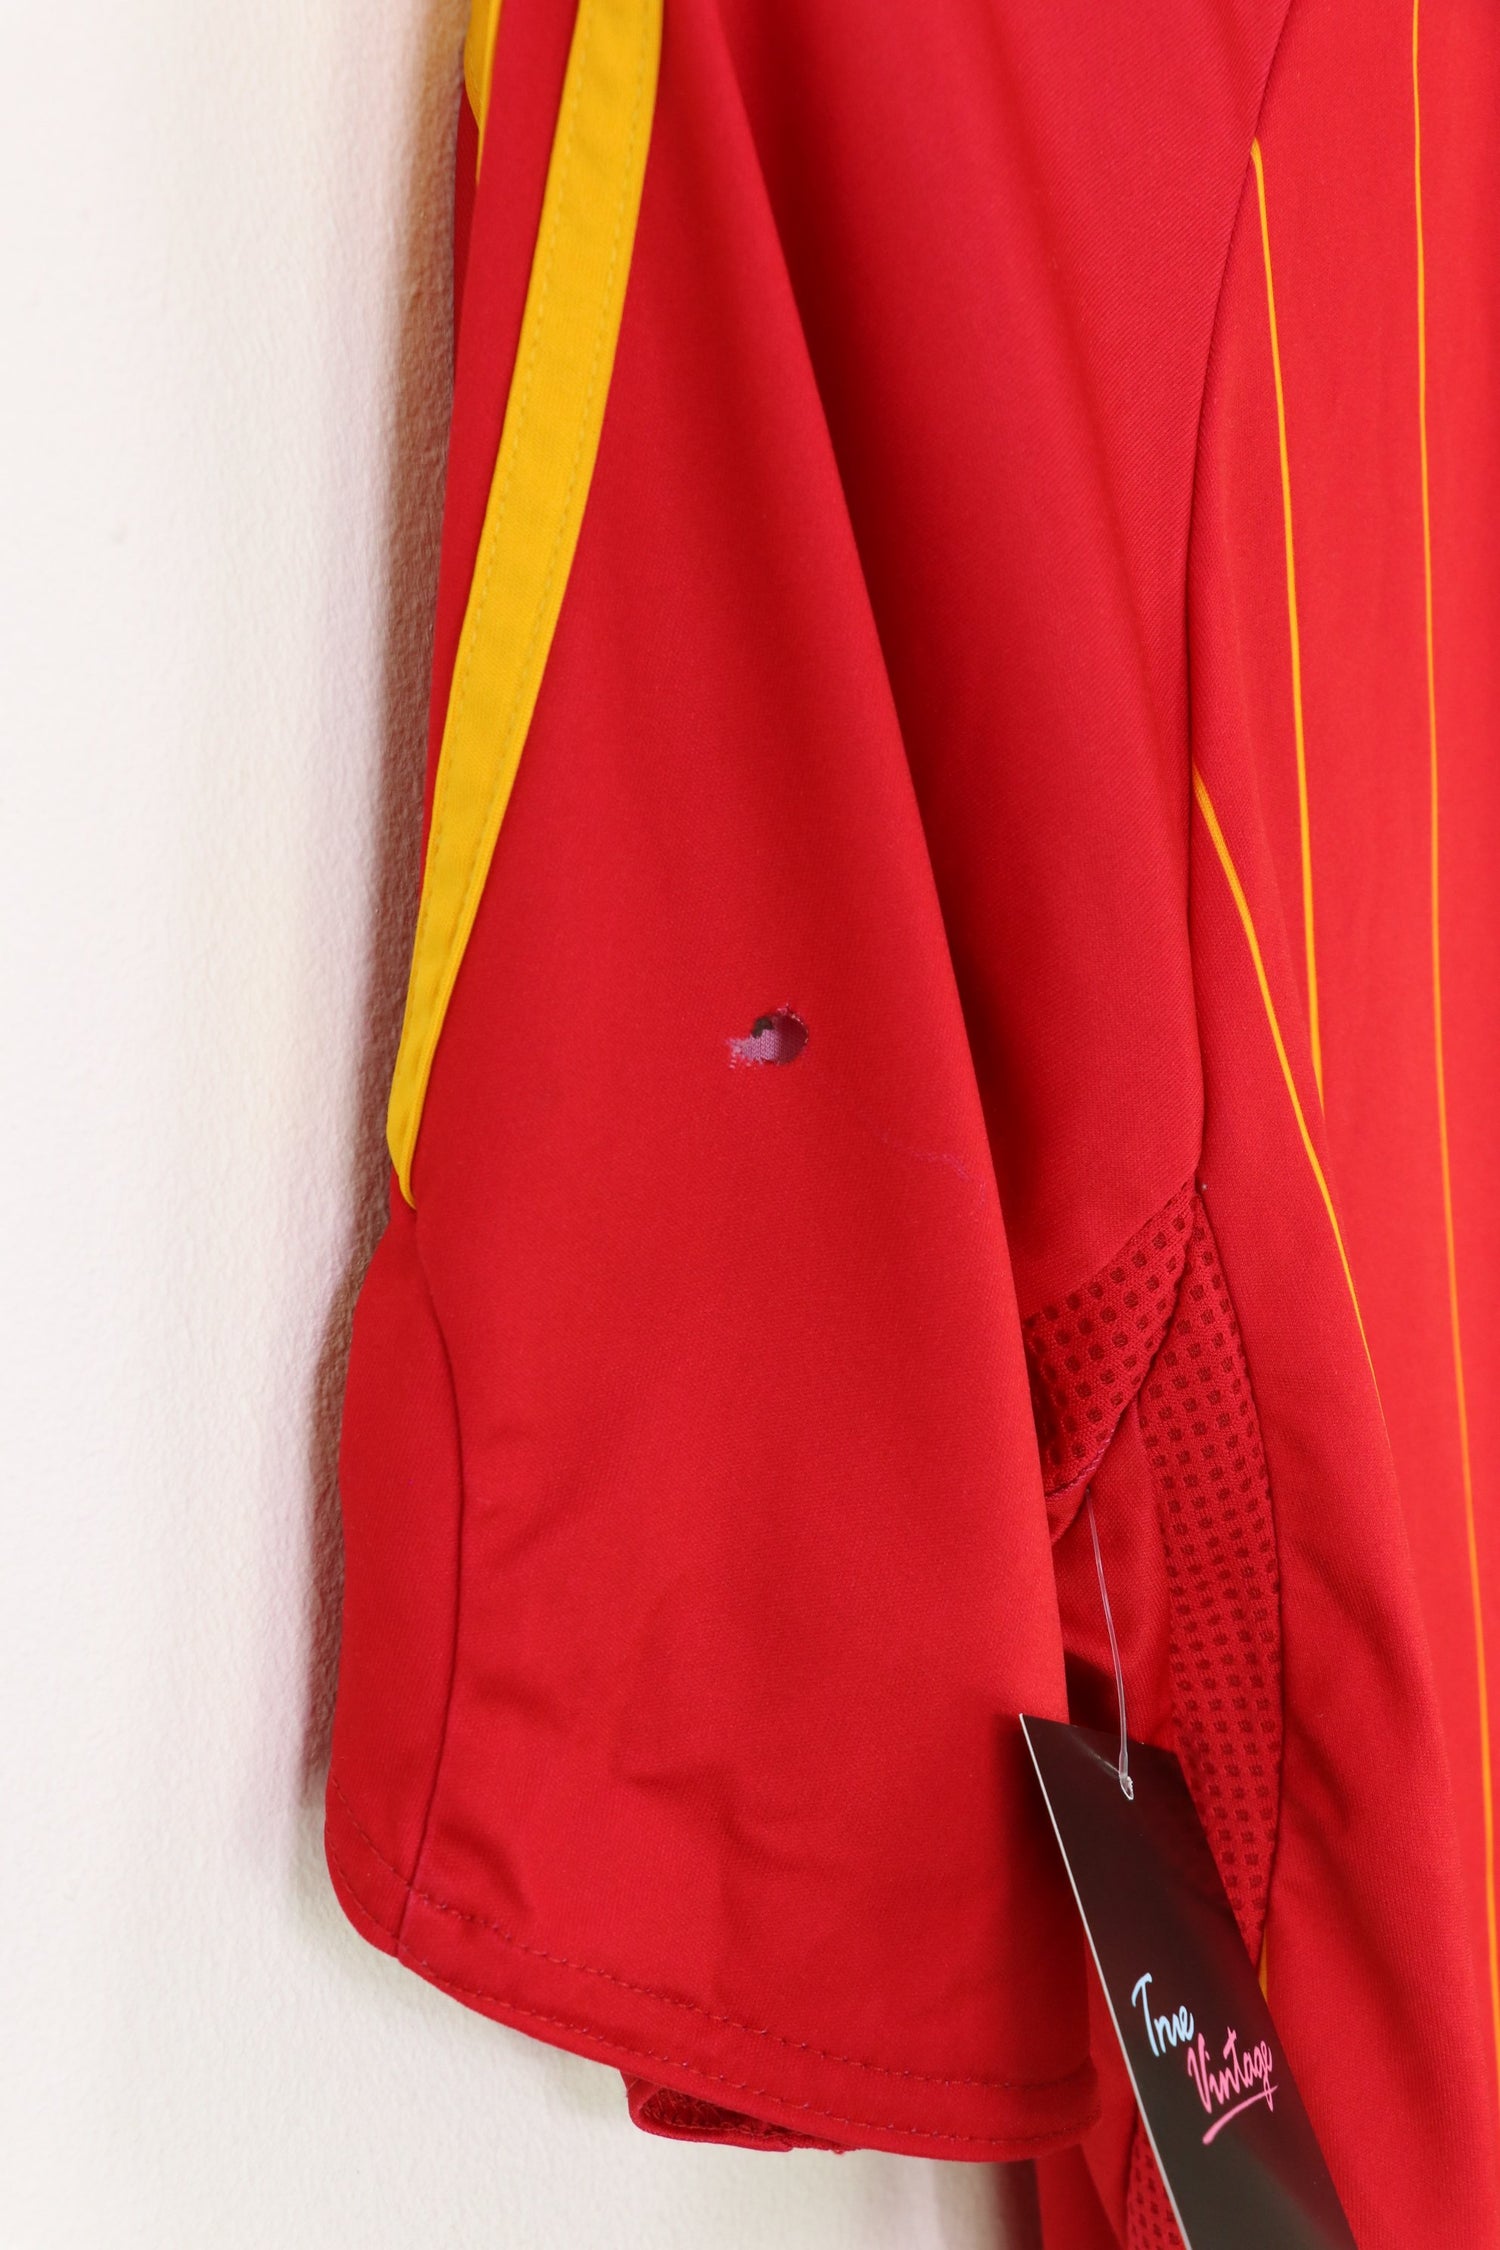 Adidas Spain Football Shirt Red/Yellow Medium